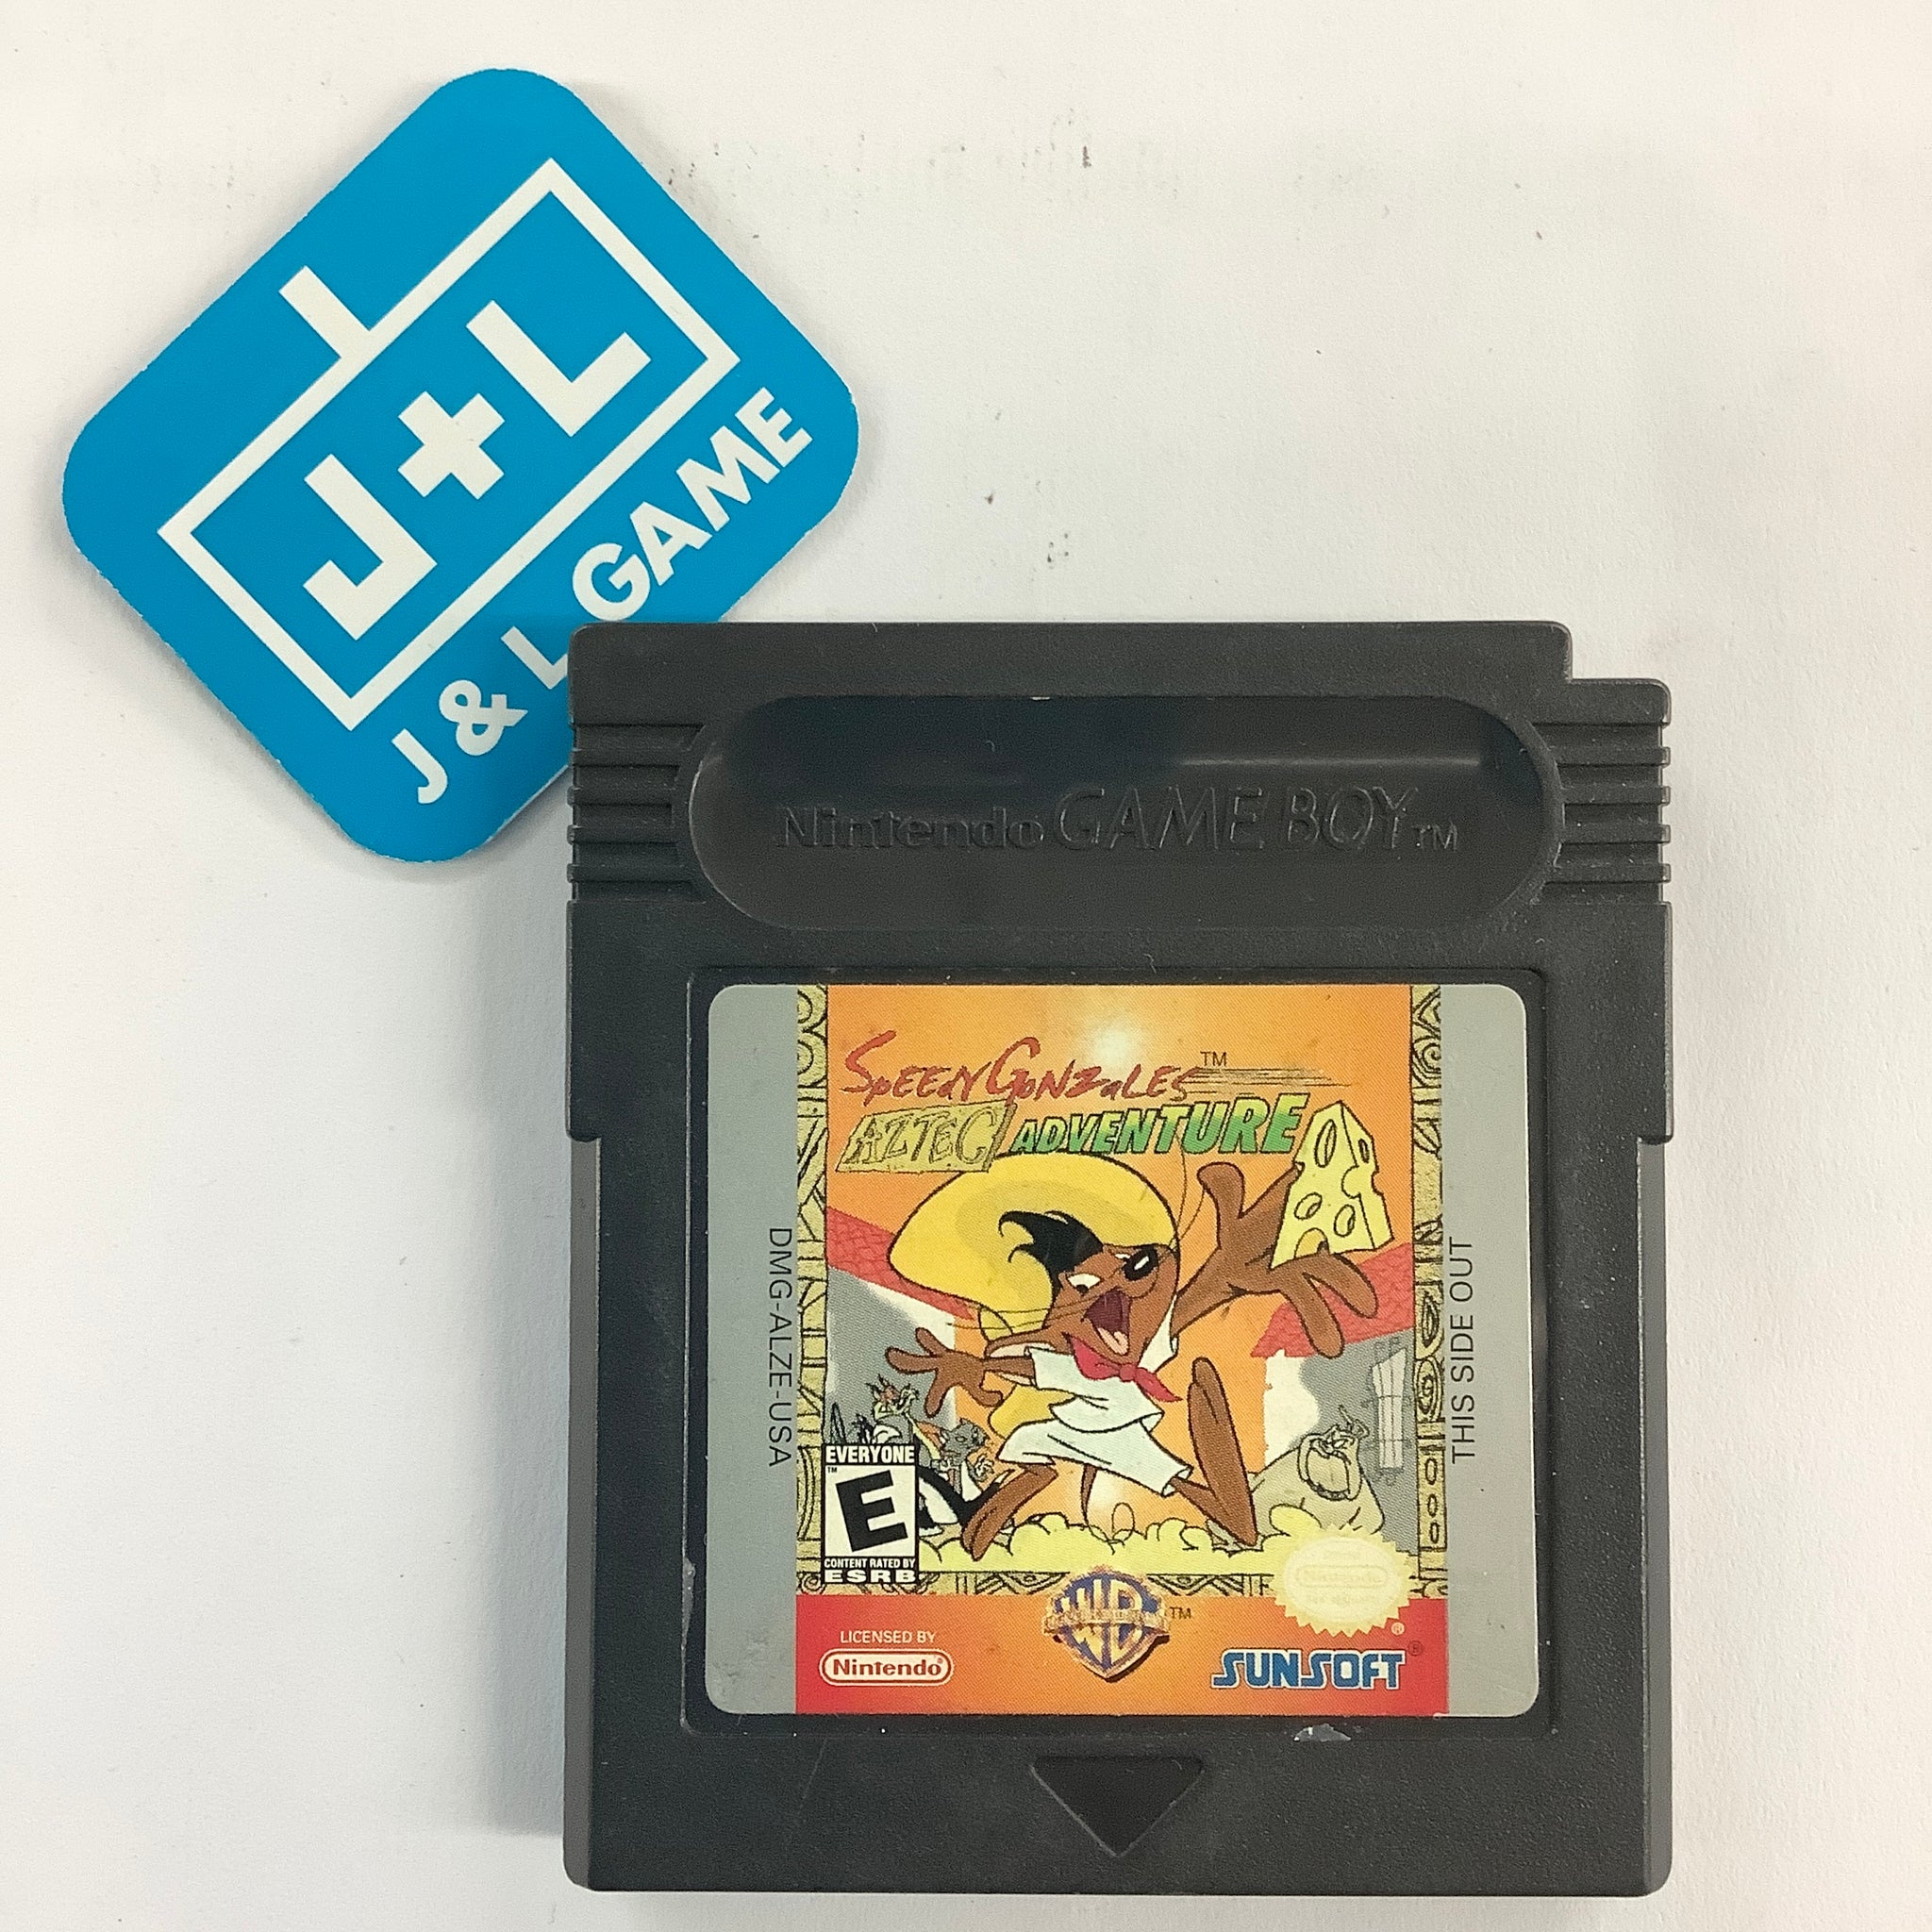 Speedy Gonzales: Aztec Adventure - (GBC) Game Boy Color [Pre-Owned